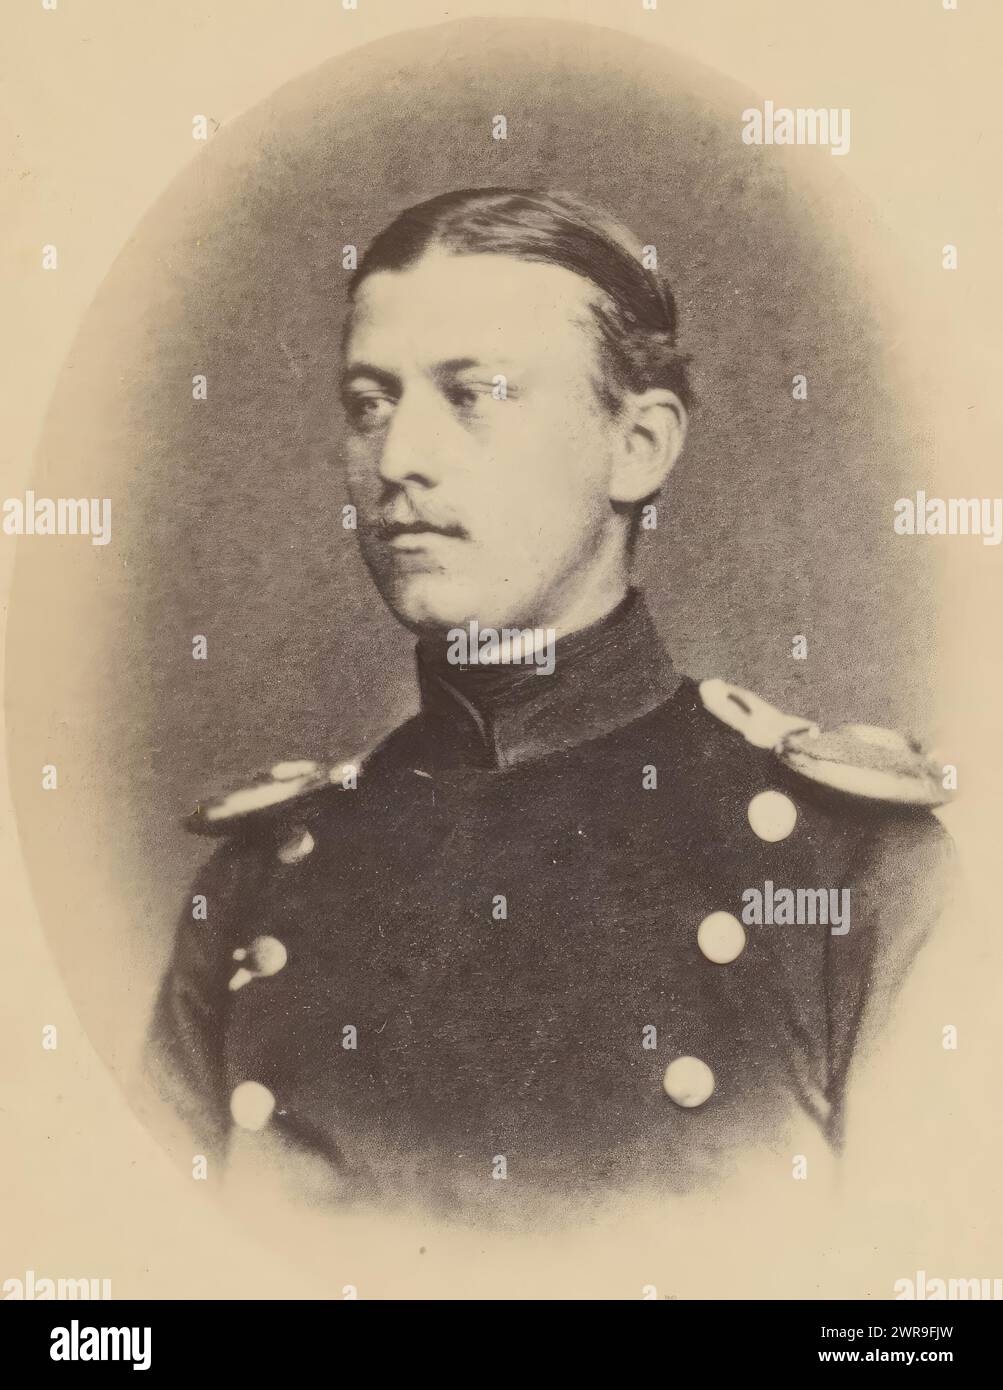 Portrait of Prince Anton von Hohenzollern-Sigmaringen in uniform, This photo is part of an album., anonymous, 1860 - 1866, cardboard, albumen print, height 83 mm × width 52 mm, photograph Stock Photo